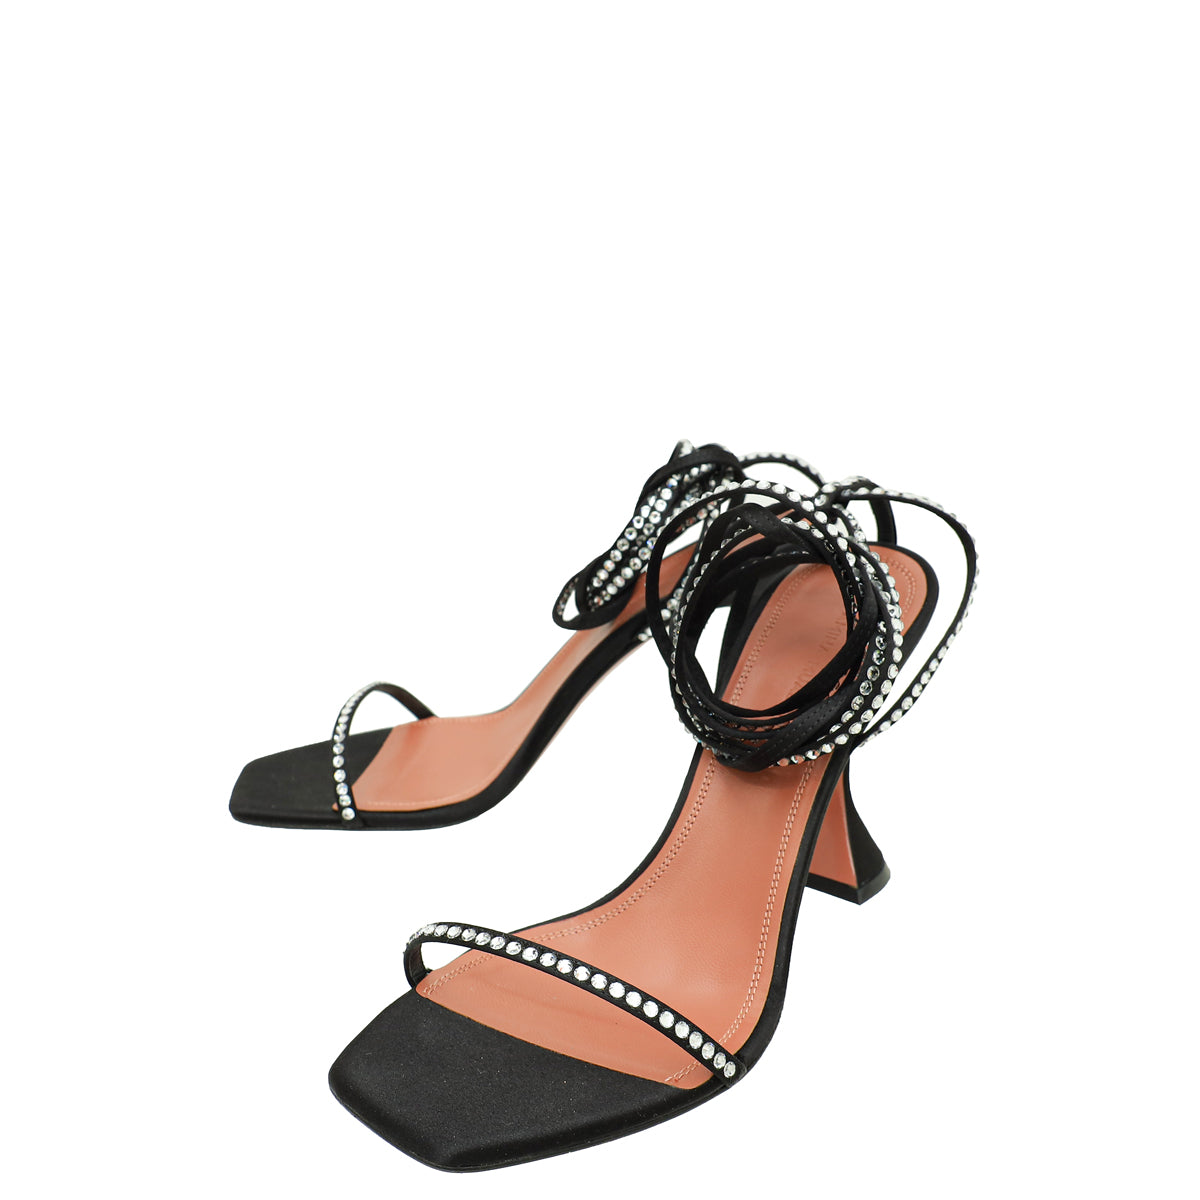 Amina Muaddi Black Satin Crystal Vita Sandals 39.5